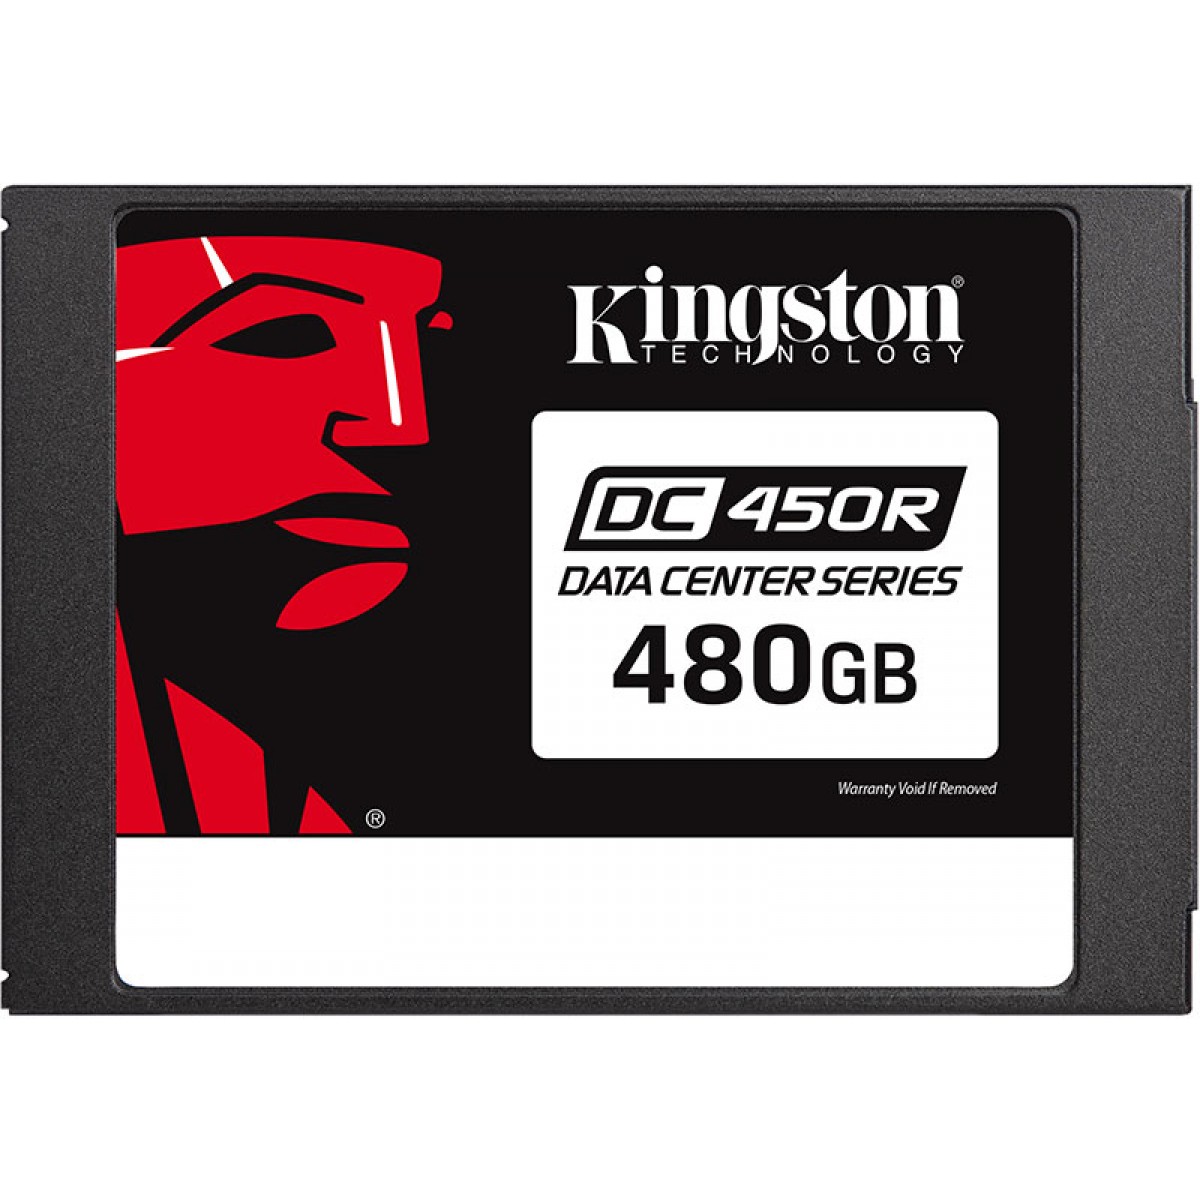 Disco KINGSTON SSD 480GB Sata3 2.5" 560/510MB/s 3D DC450R